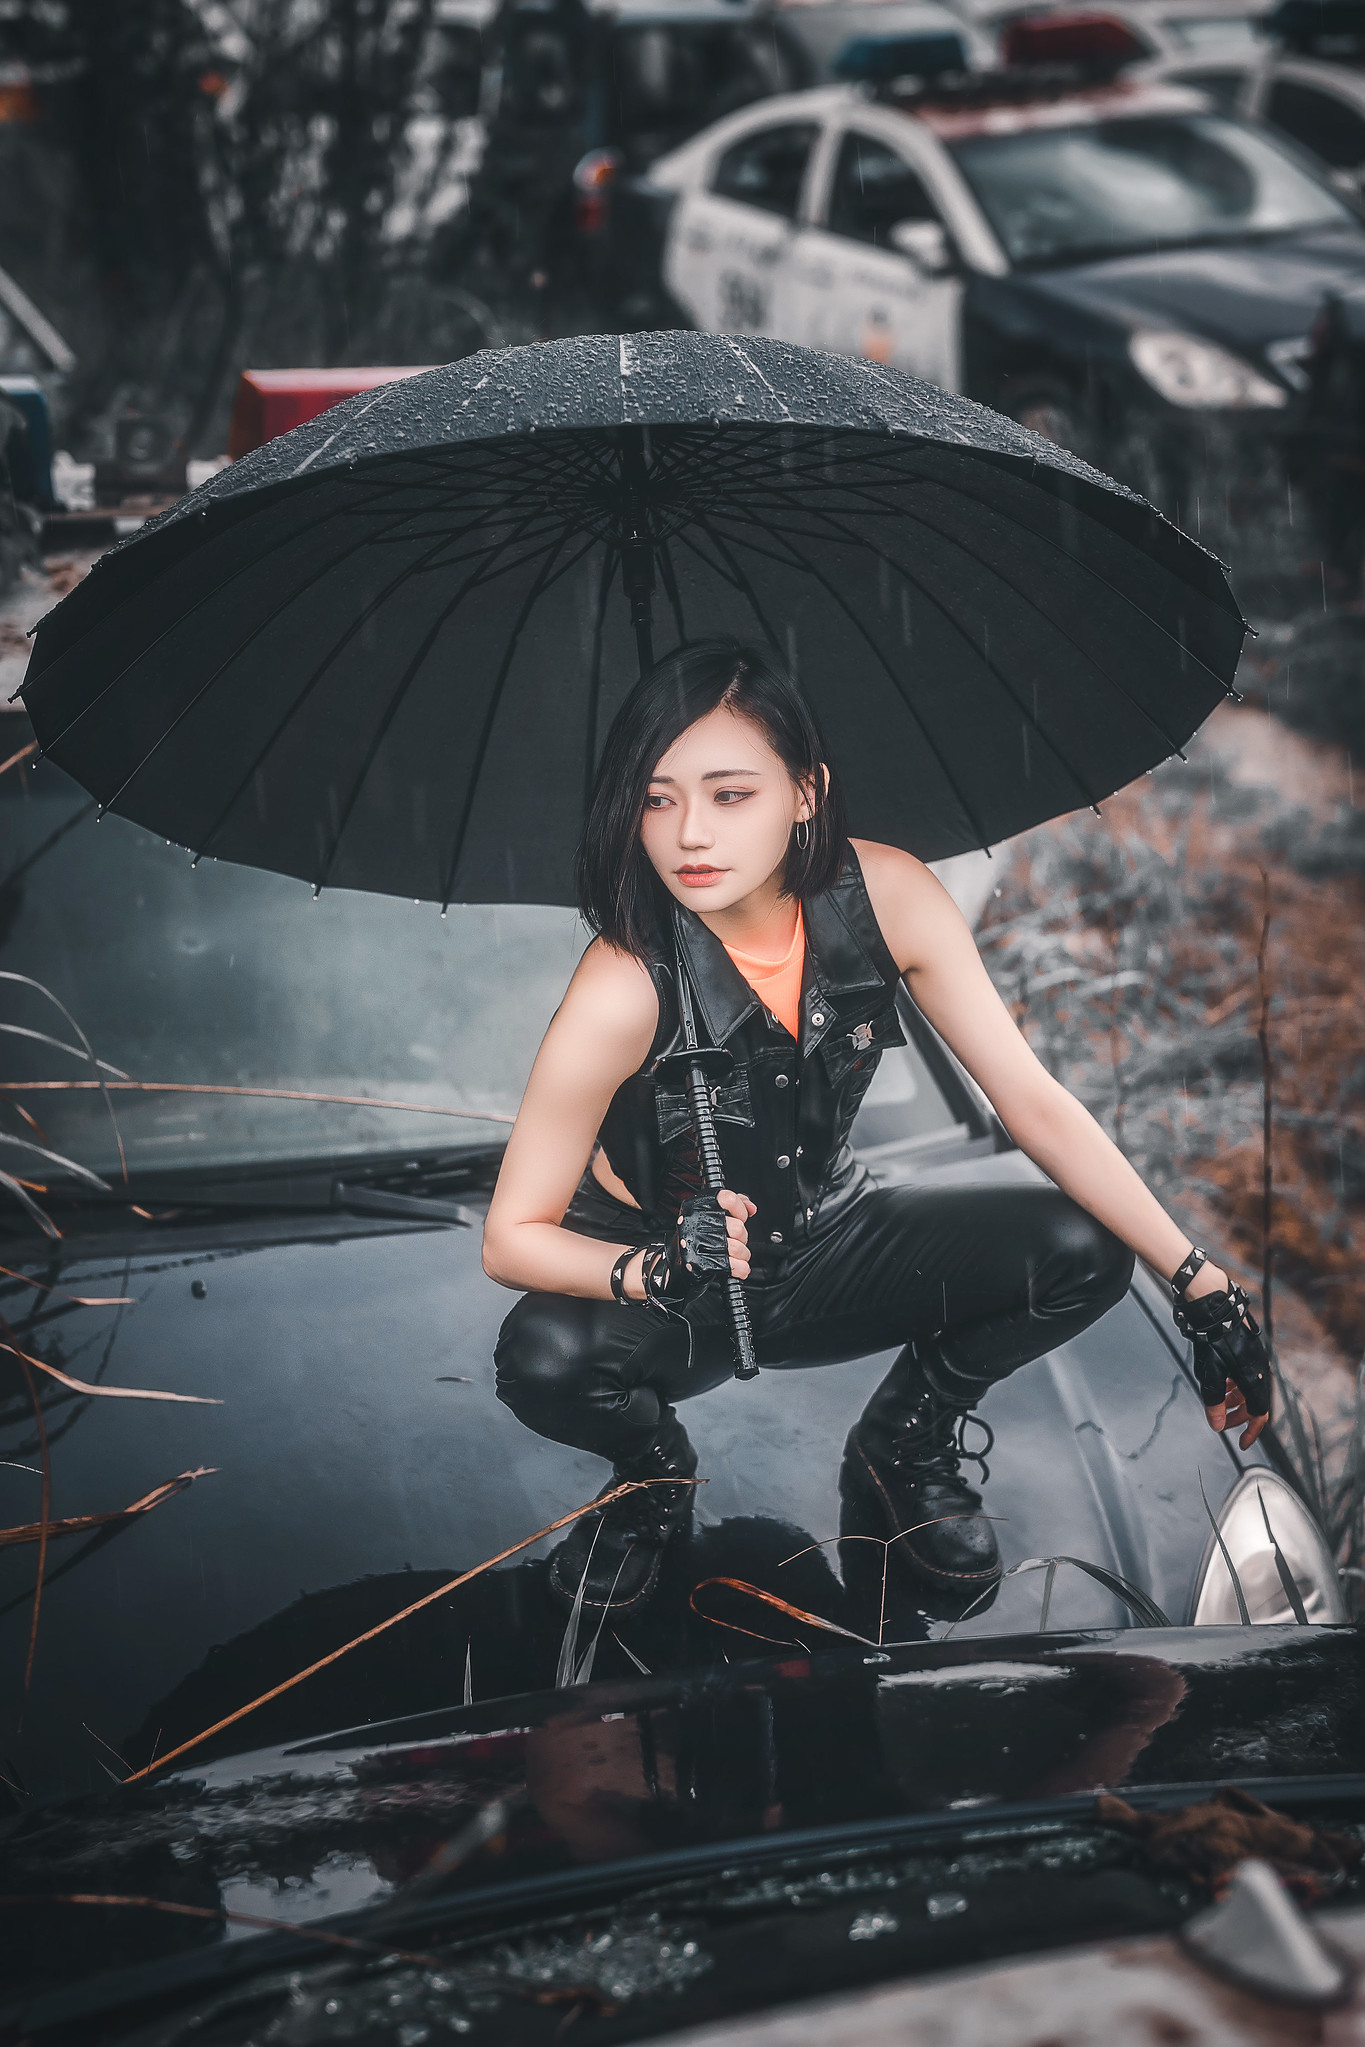 People 1365x2047 Asian women model junkyard umbrella women with umbrella car vehicle car wreck squatting black hair red lipstick women outdoors looking away